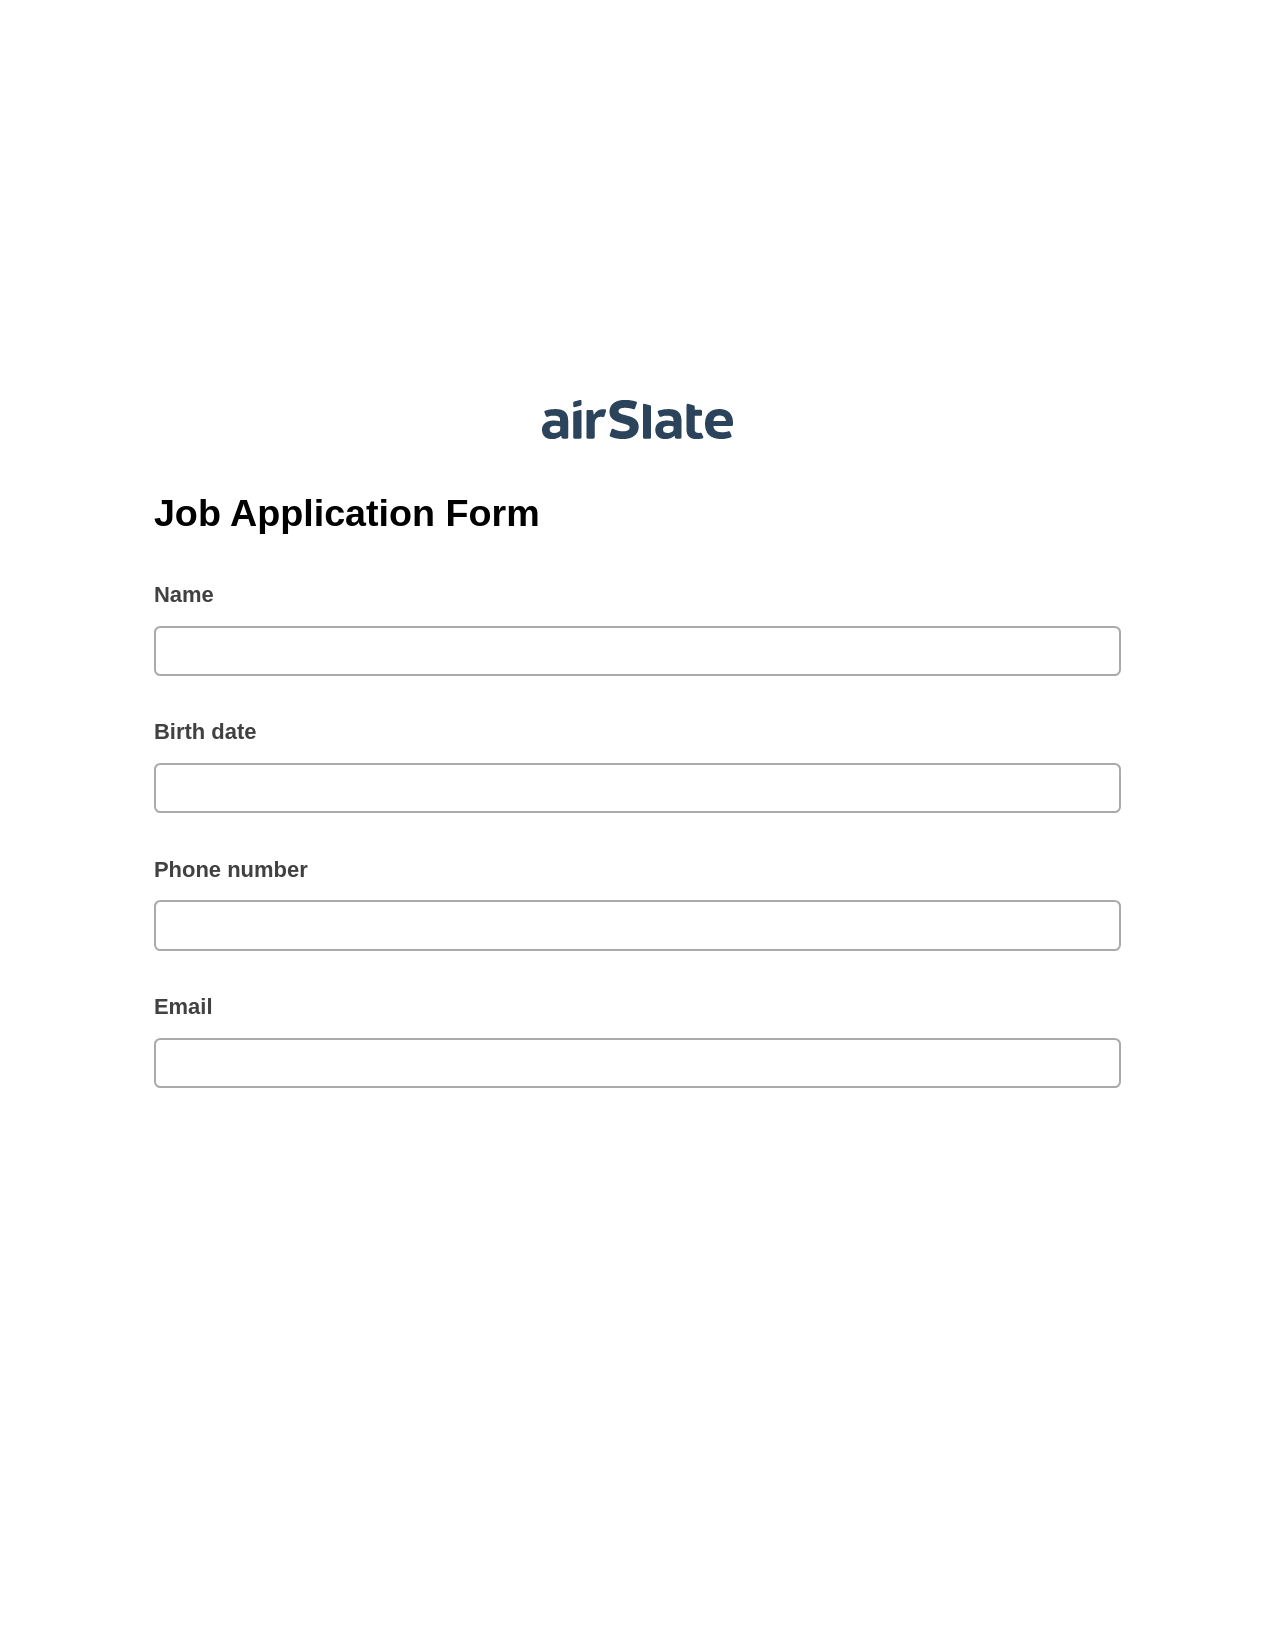 Job Application Form Pre-fill from CSV File Dropdown Options Bot, Create slate addon, Slack Notification Postfinish Bot